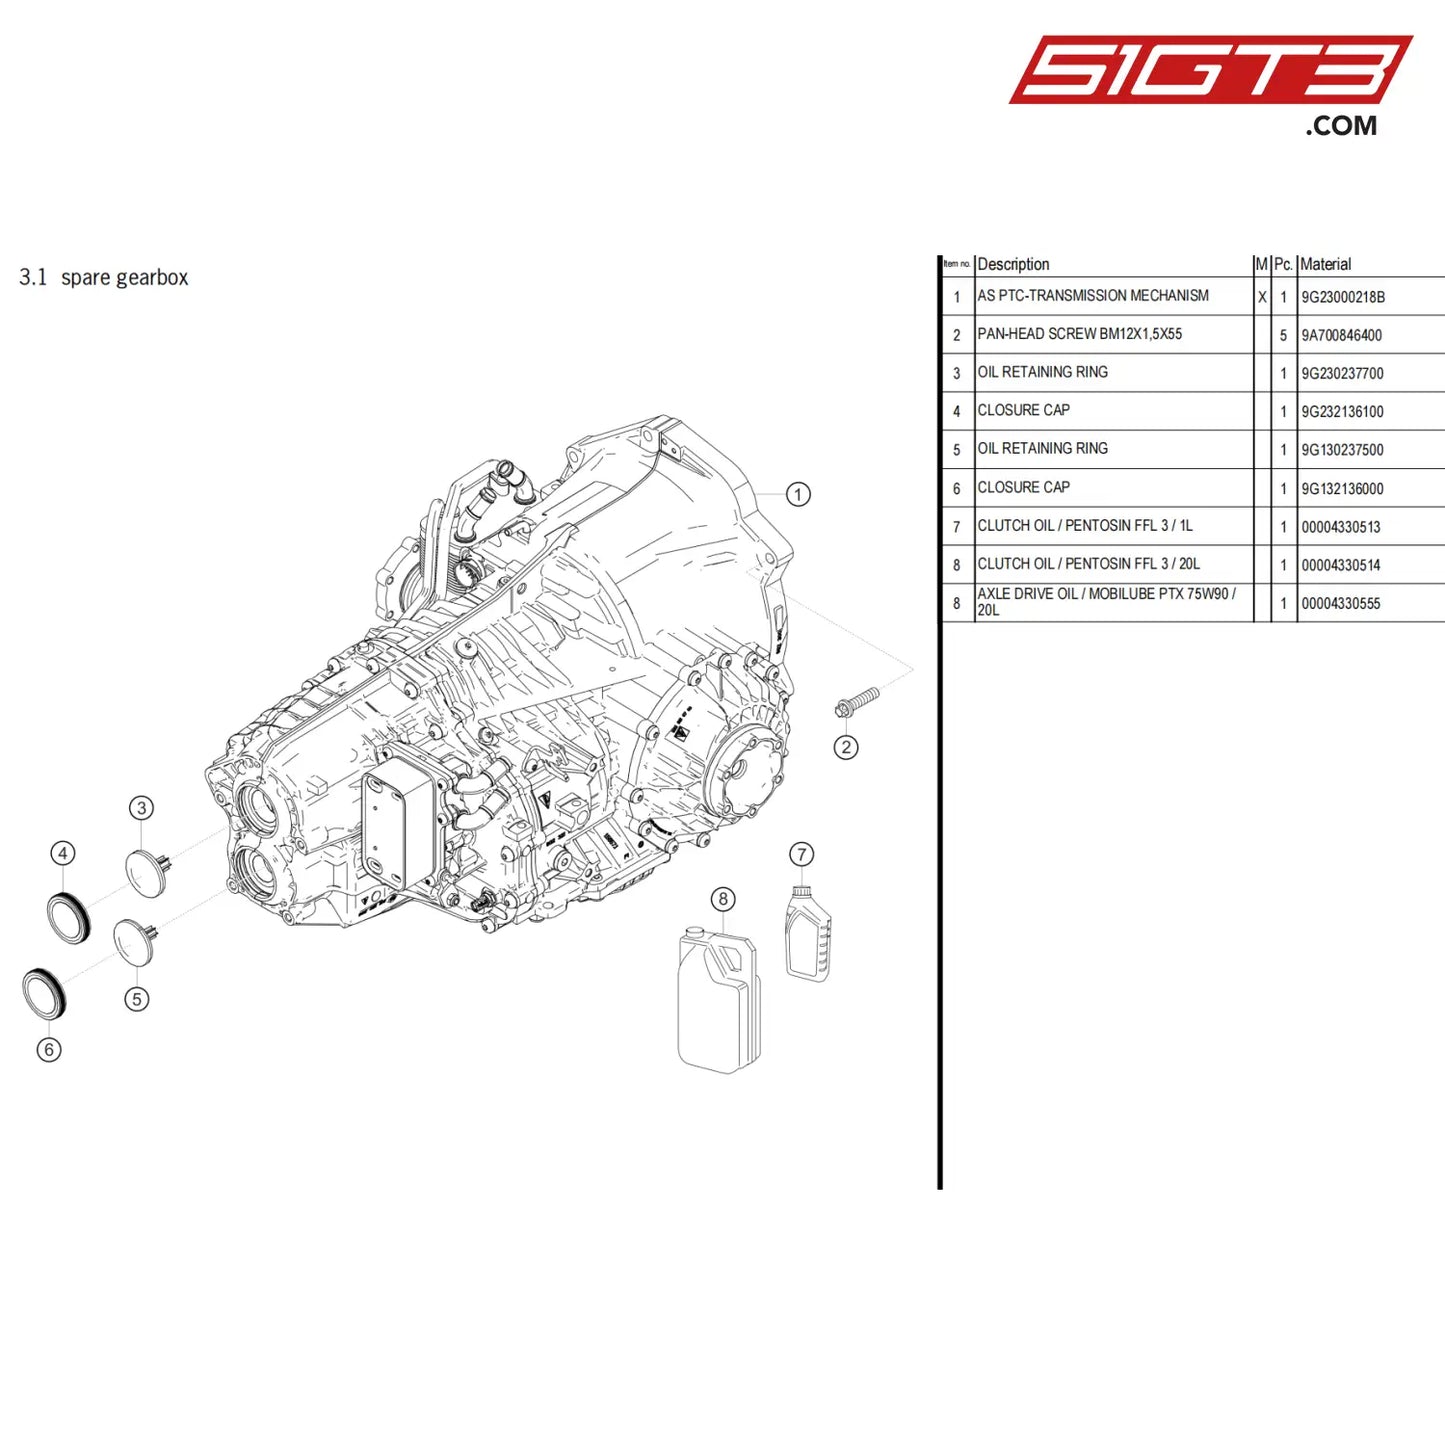 Axle Drive Oil / Mobilube Ptx 75W90 20L - 4330555 [Porsche 718 Cayman Gt4 Clubsport] Spare Gearbox